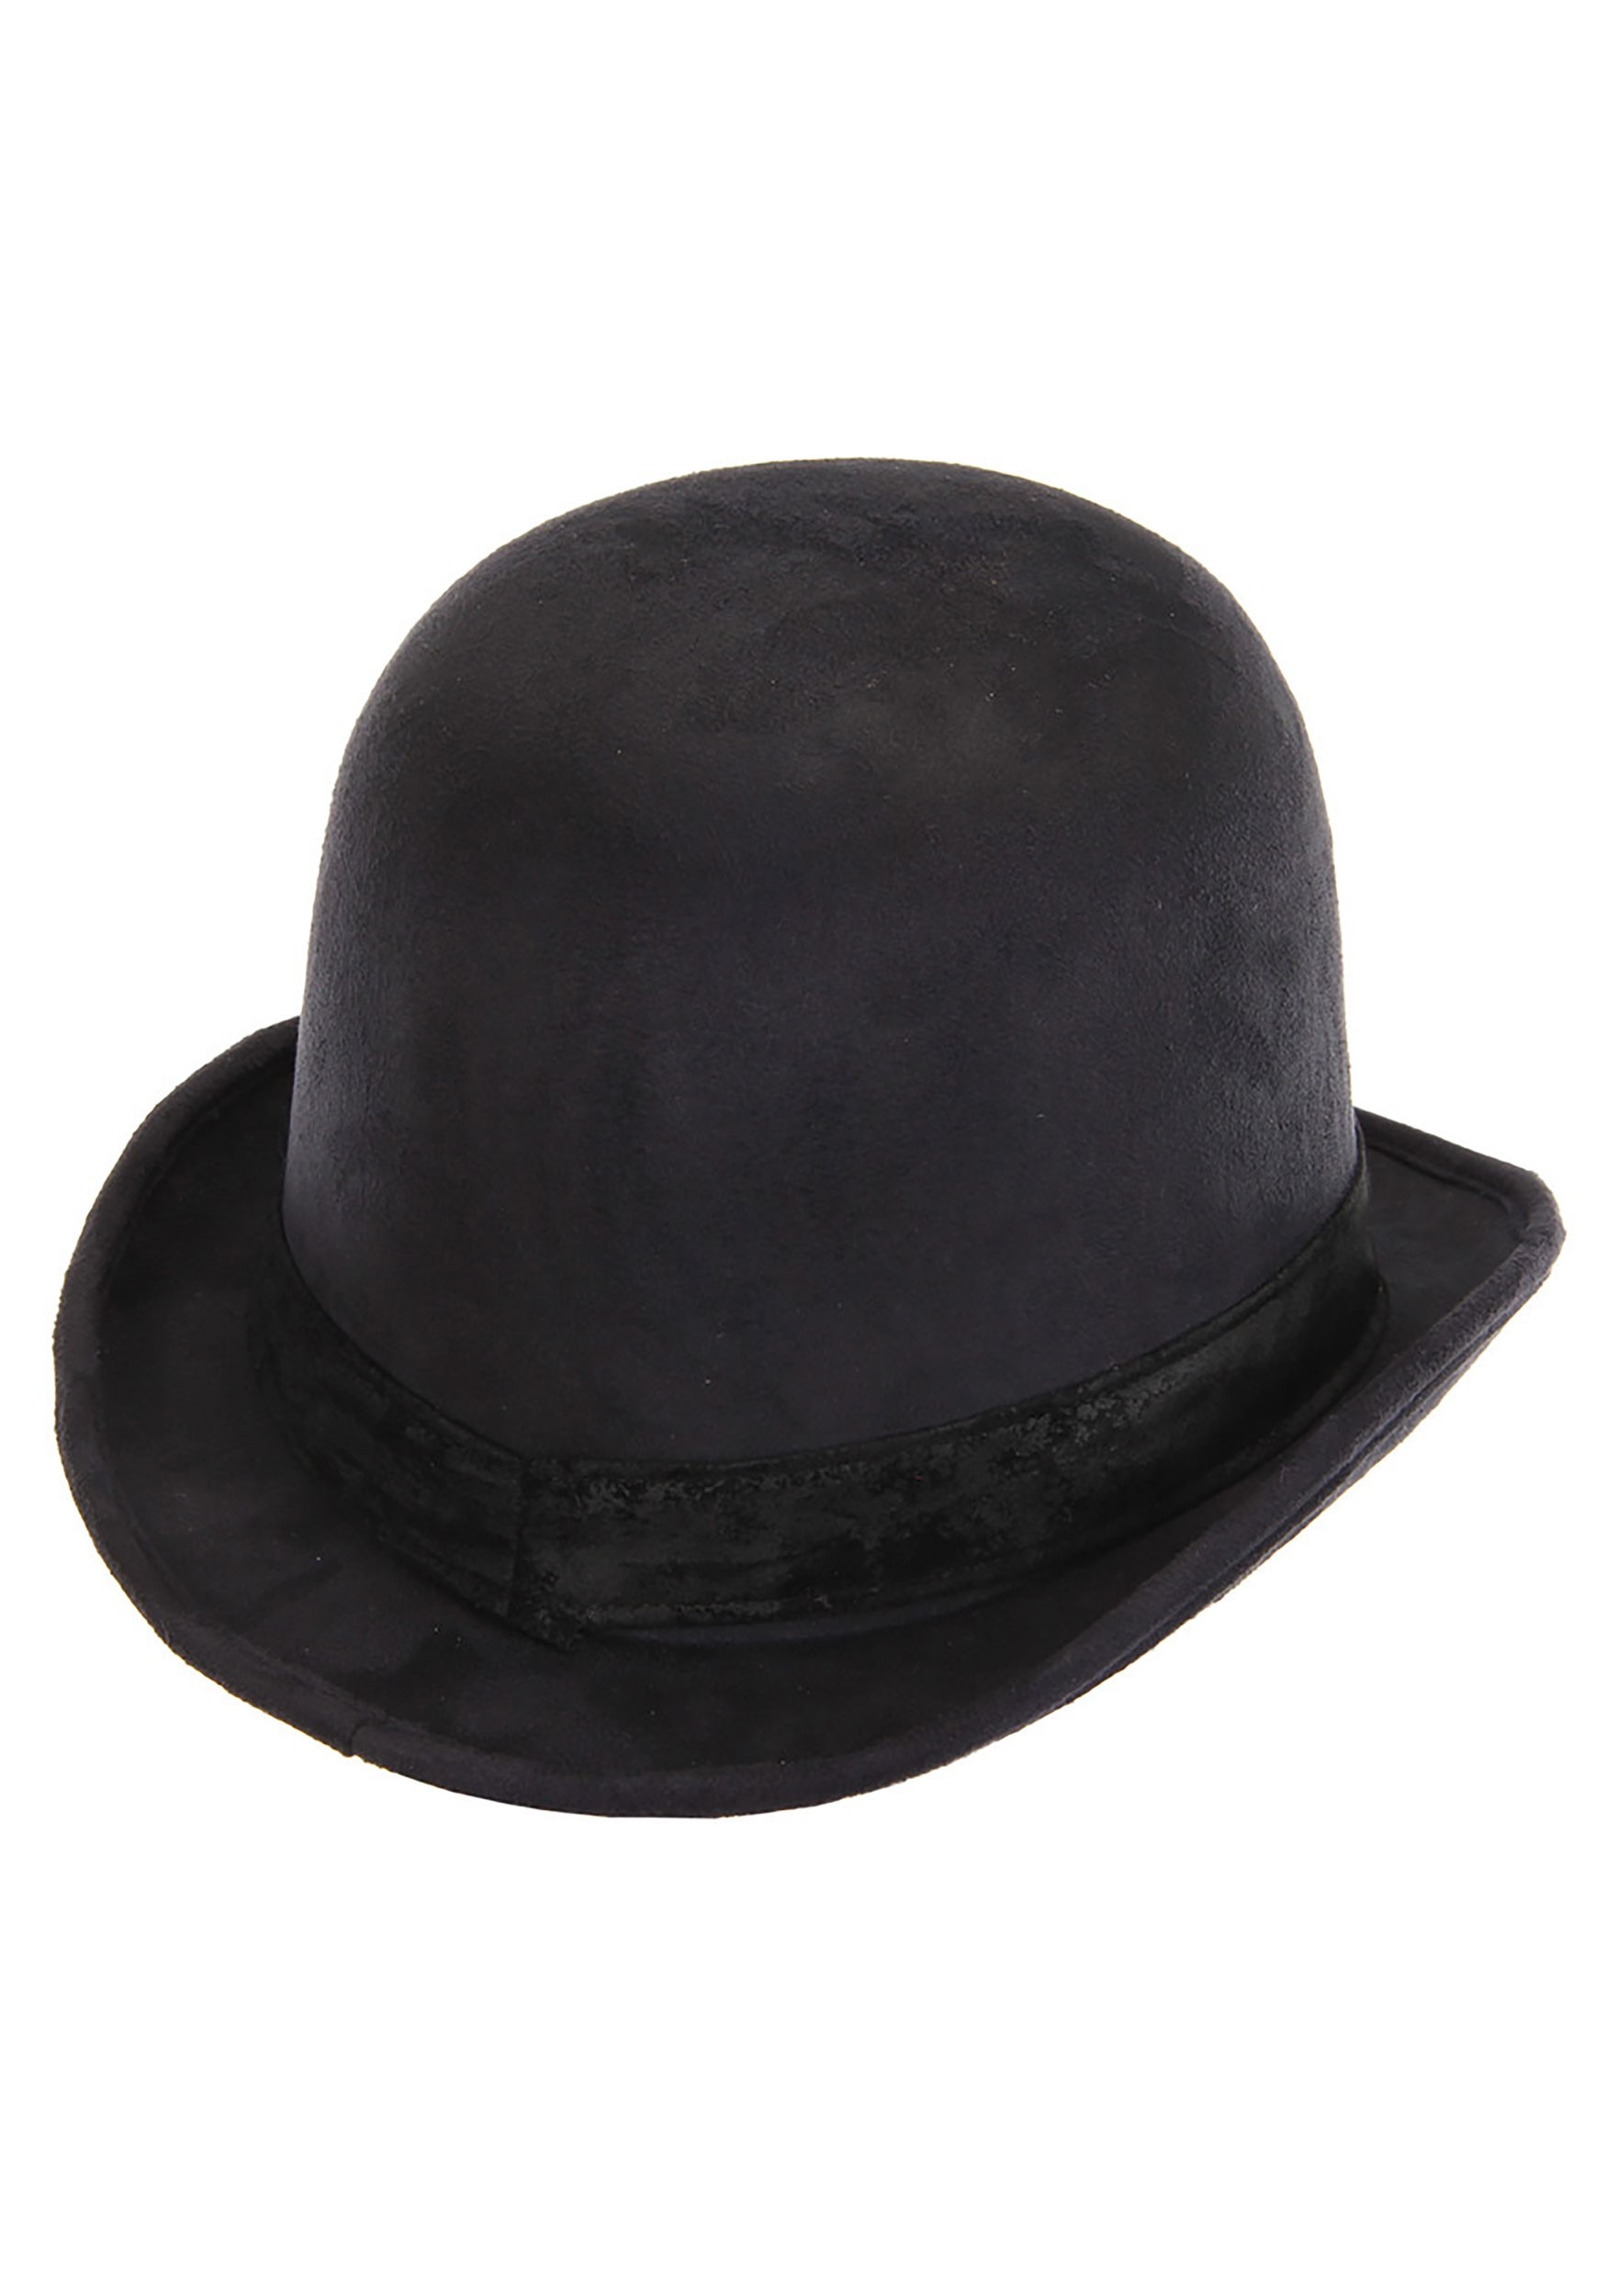 Black Costume Derby Hat